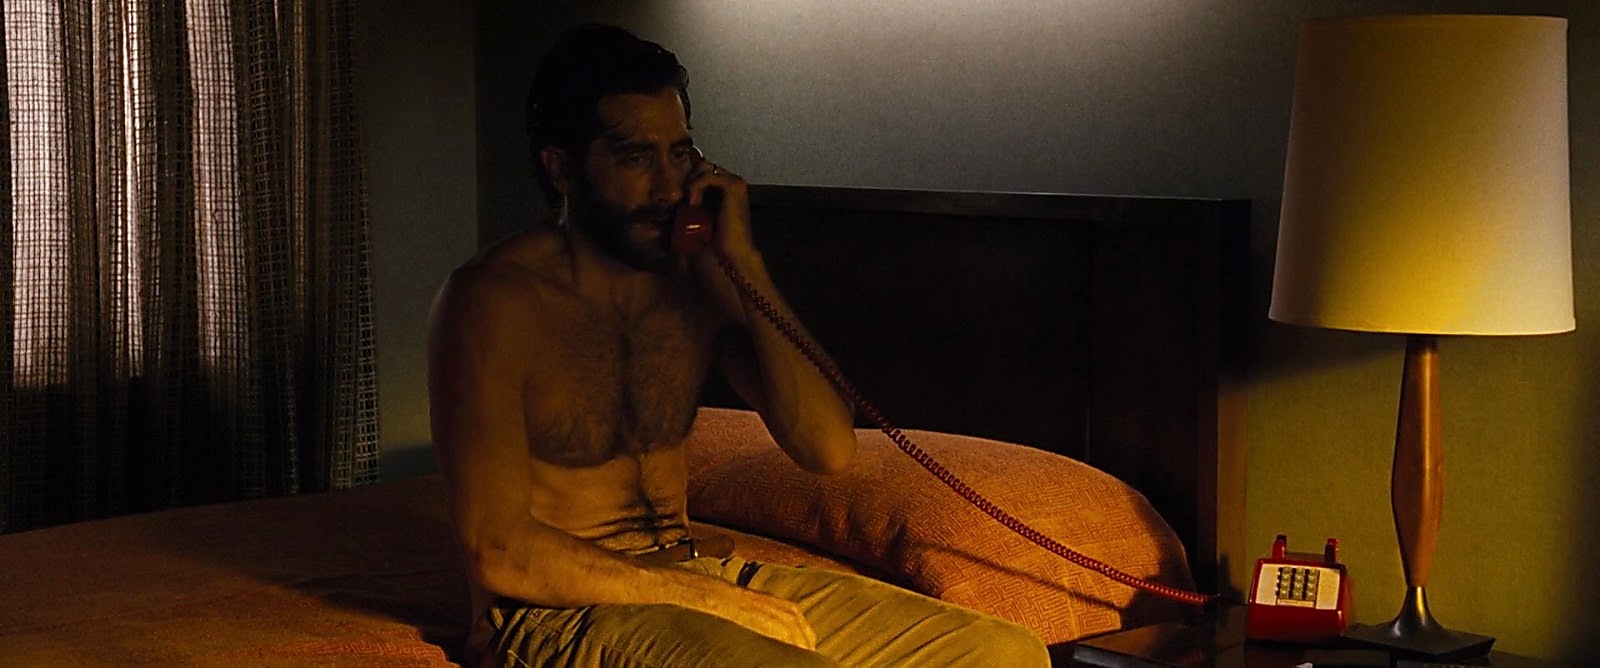 Jake Gyllenhaal sexy shirtless scene February 7, 2017, 10am